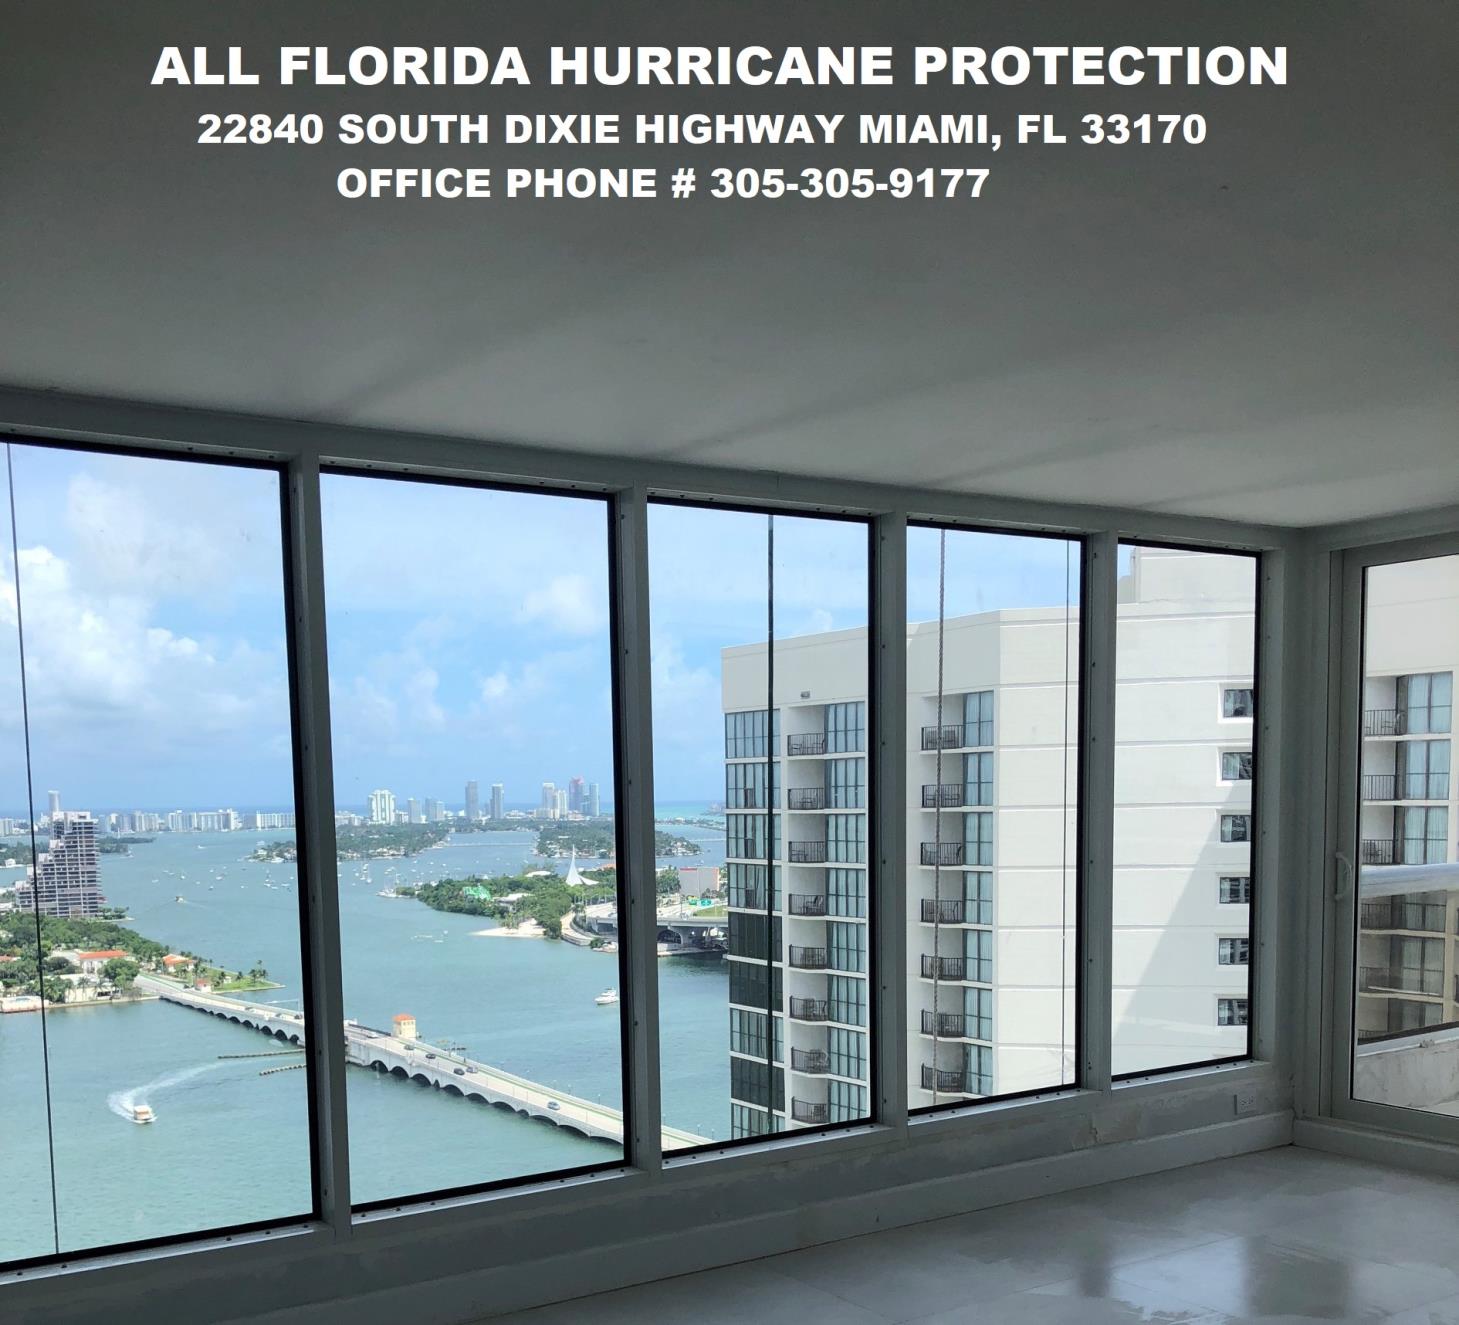 All Florida Hurricane Protection